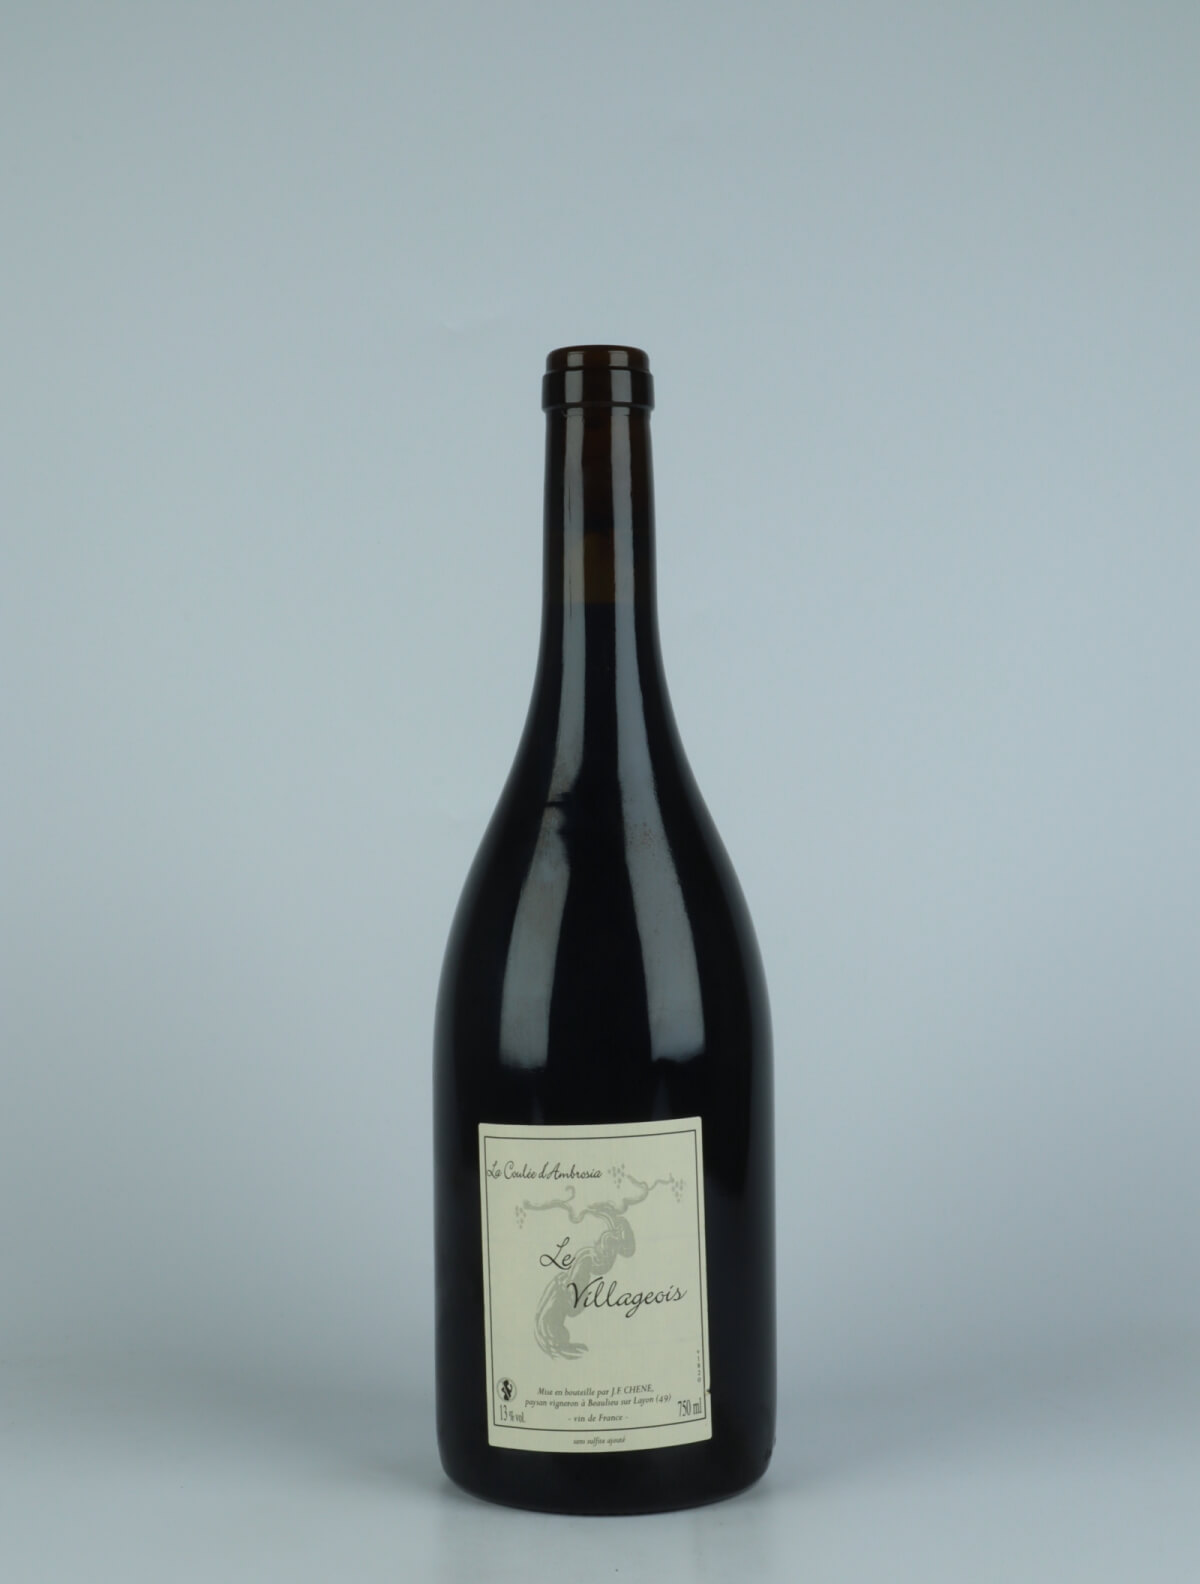 A bottle 2018 Le Villageois Red wine from Jean-Francois Chene, Loire in France